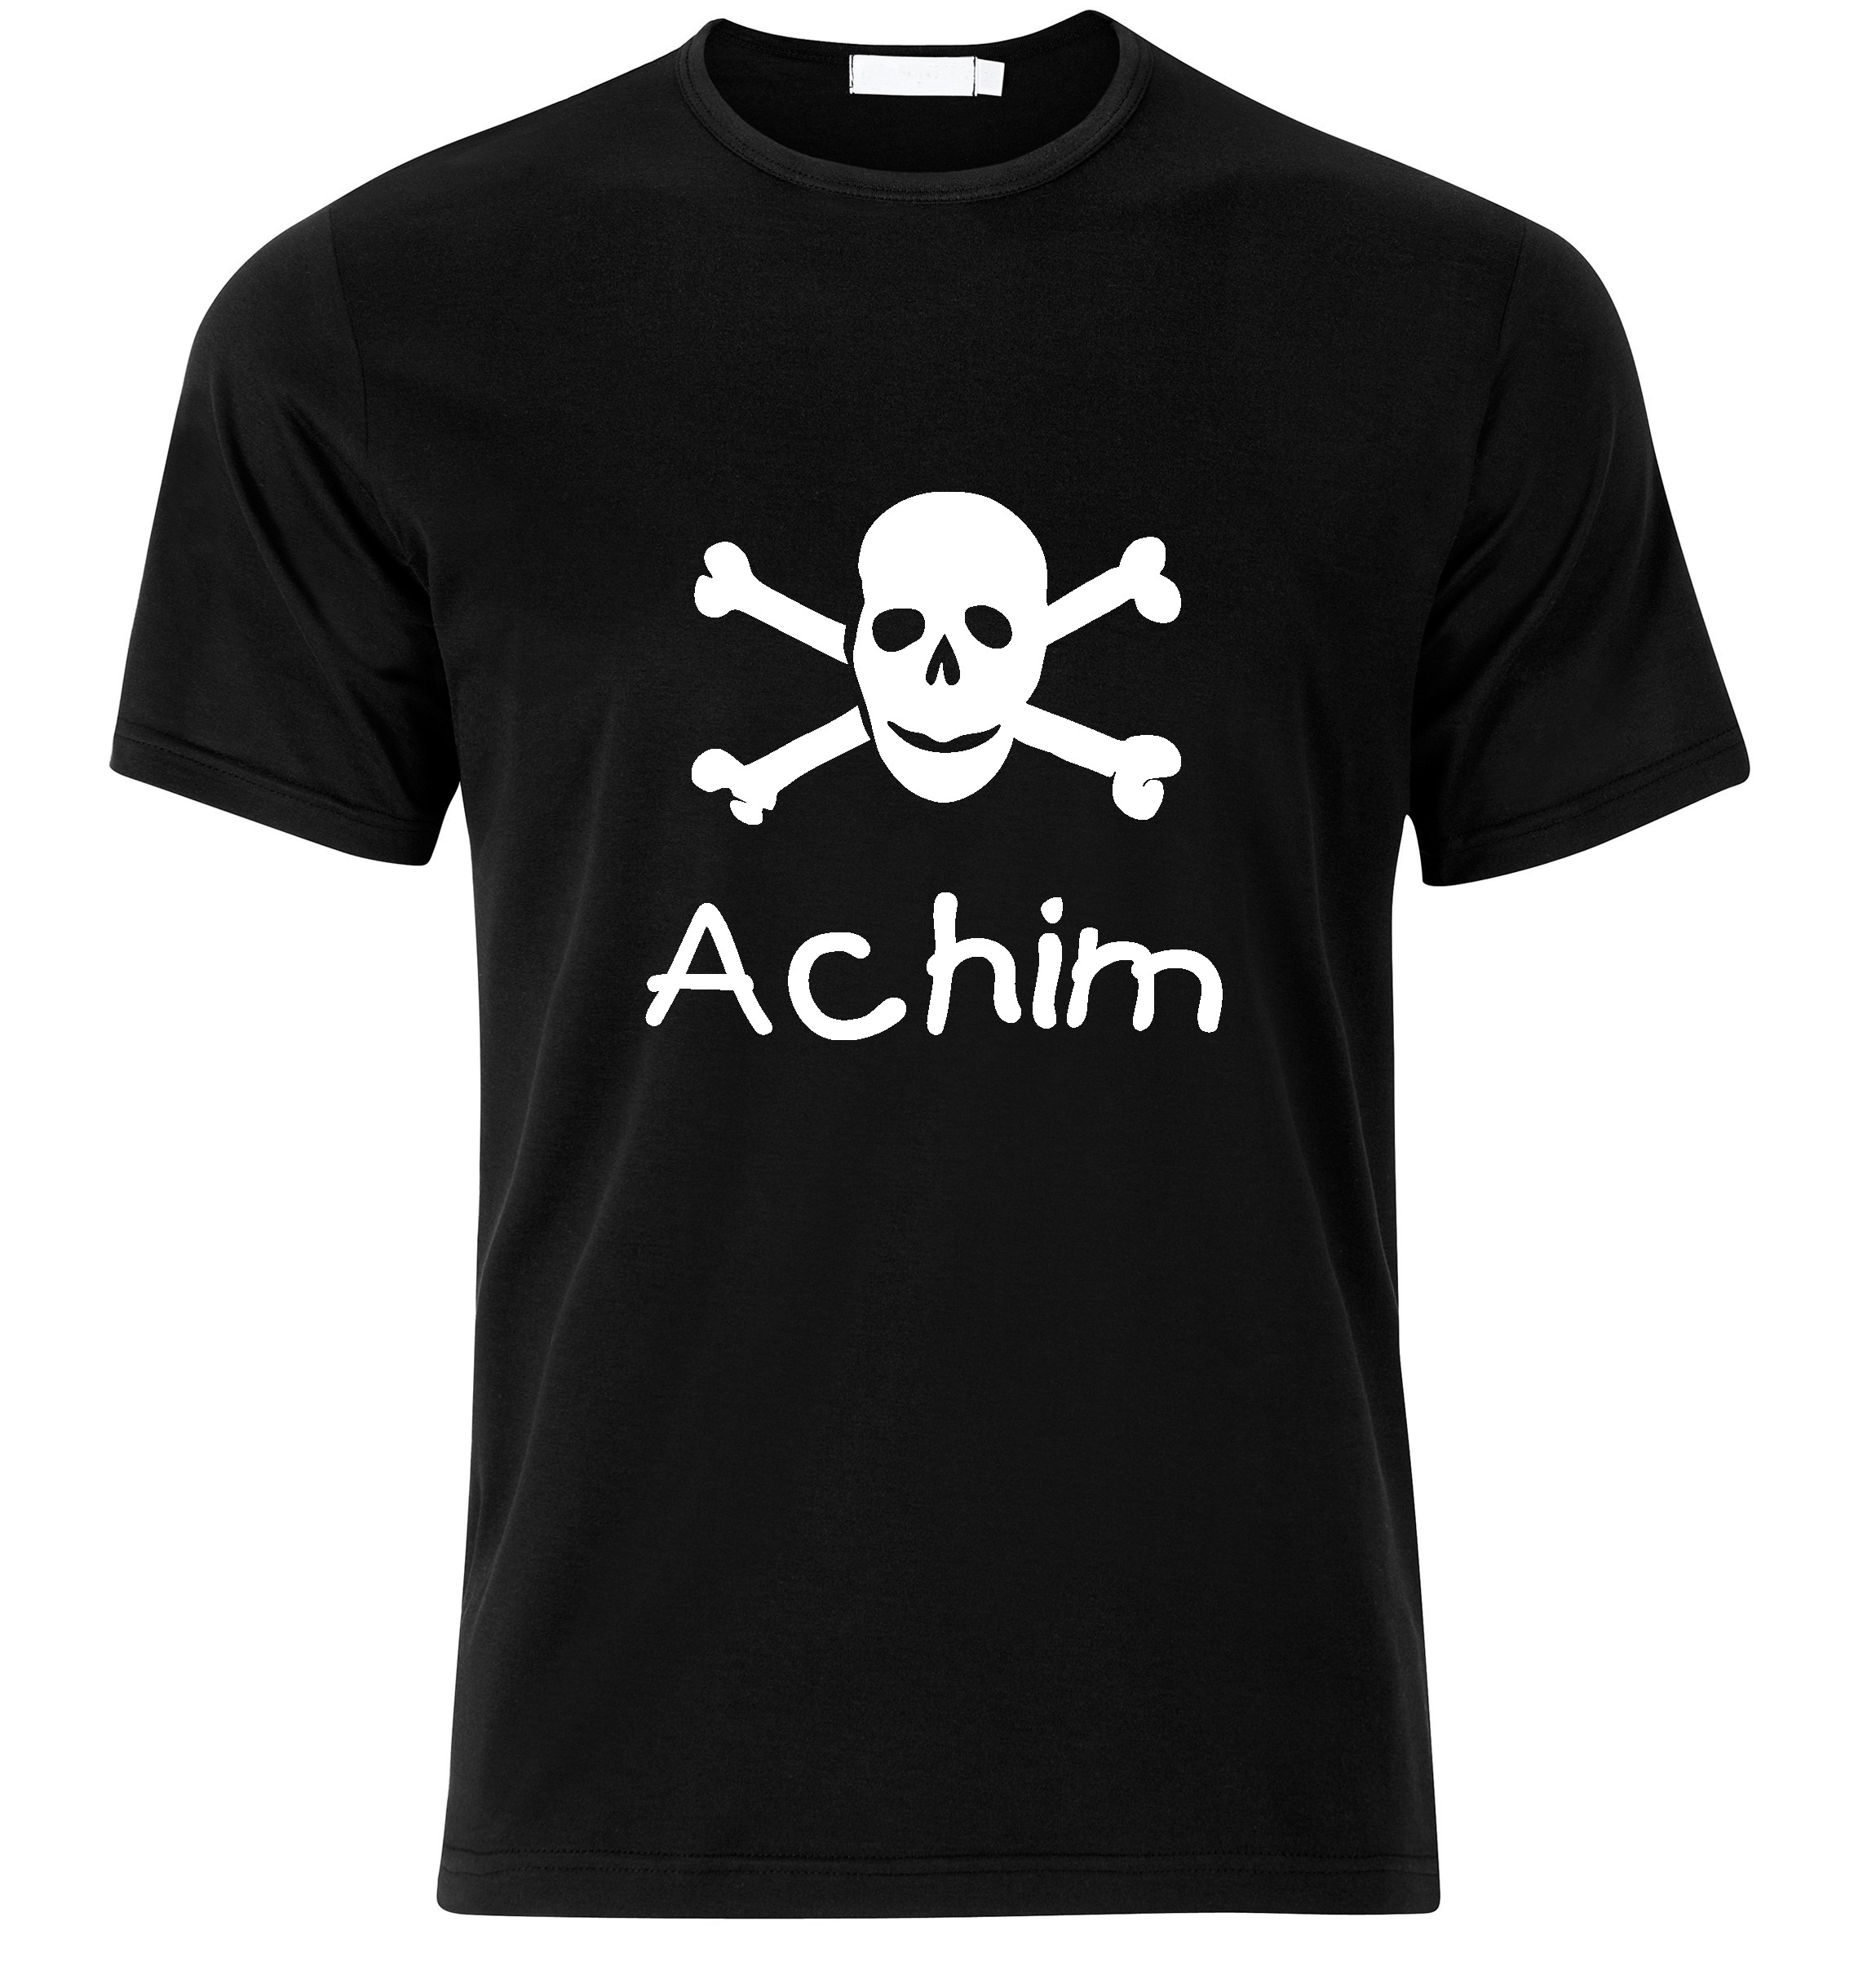 T-Shirt Achim Jolly Roger, Totenkopf